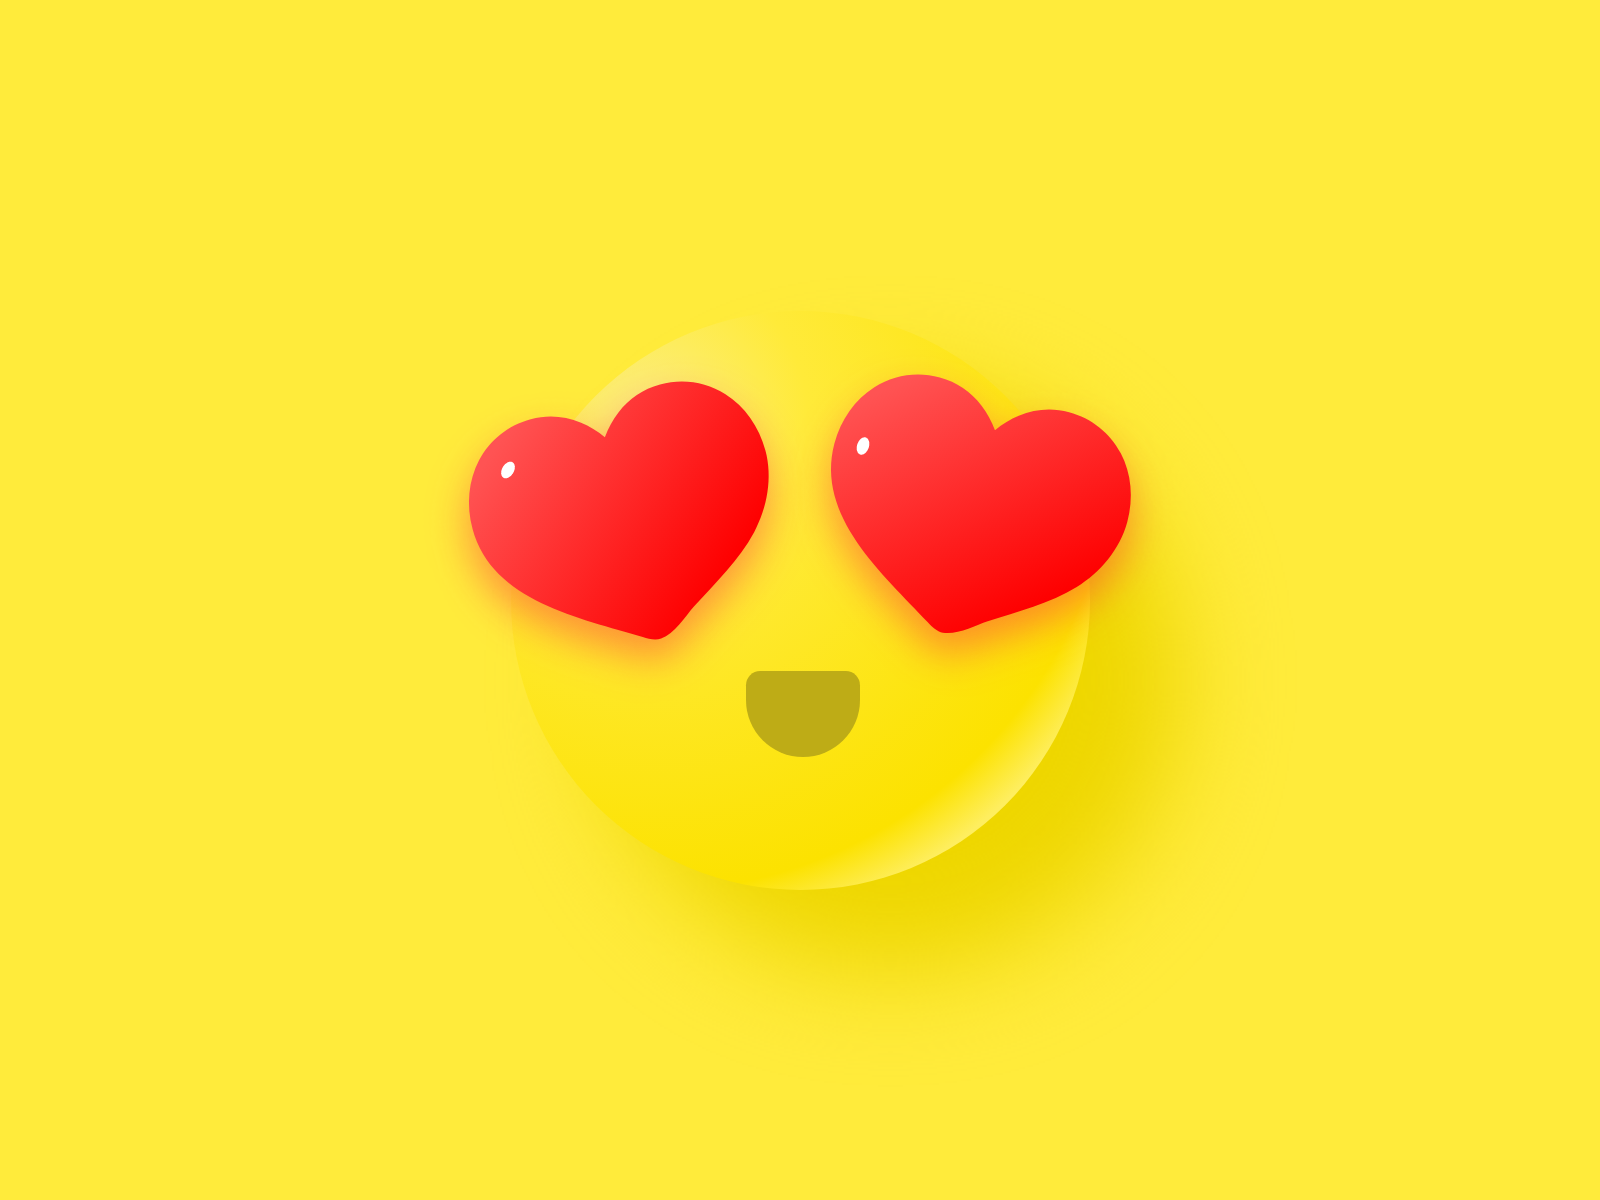 Heart Eye Emoji in Adobe XD by vishualiser on Dribbble